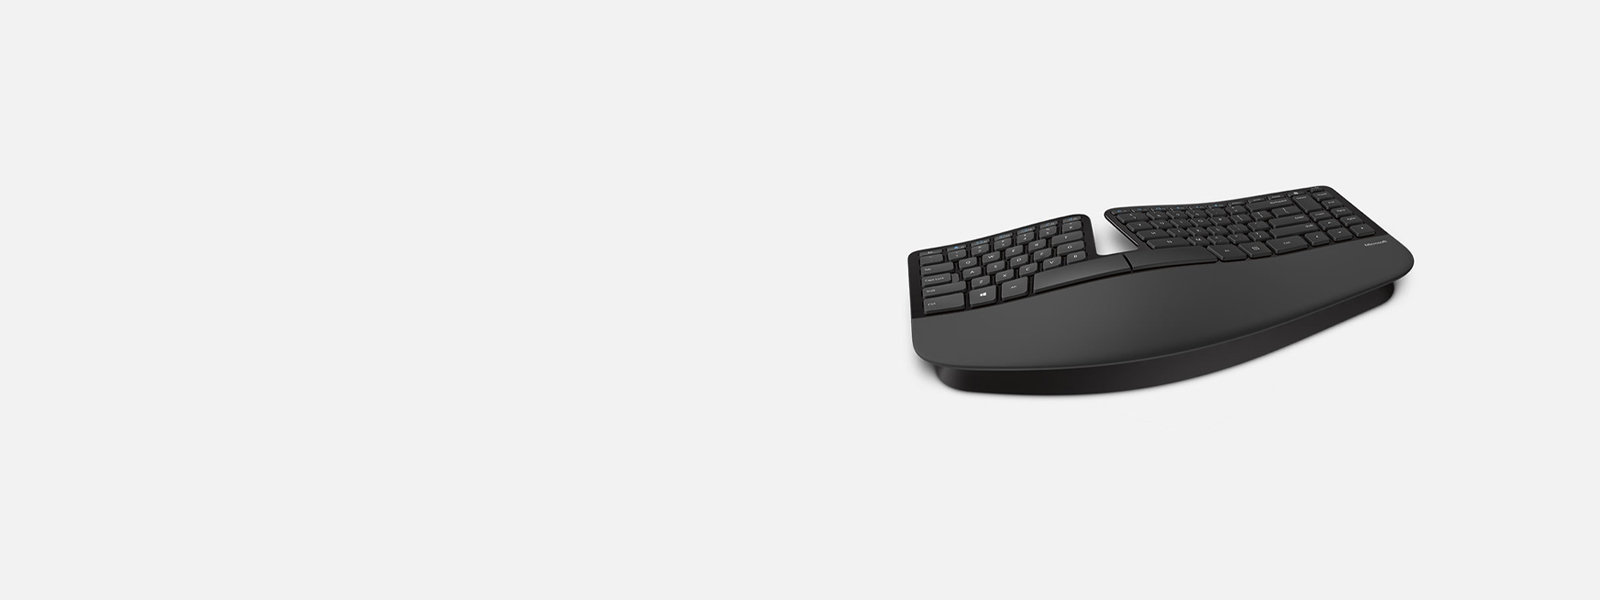 Sculpt Ergonomic Keyboard for Business Business | Accessories Microsoft